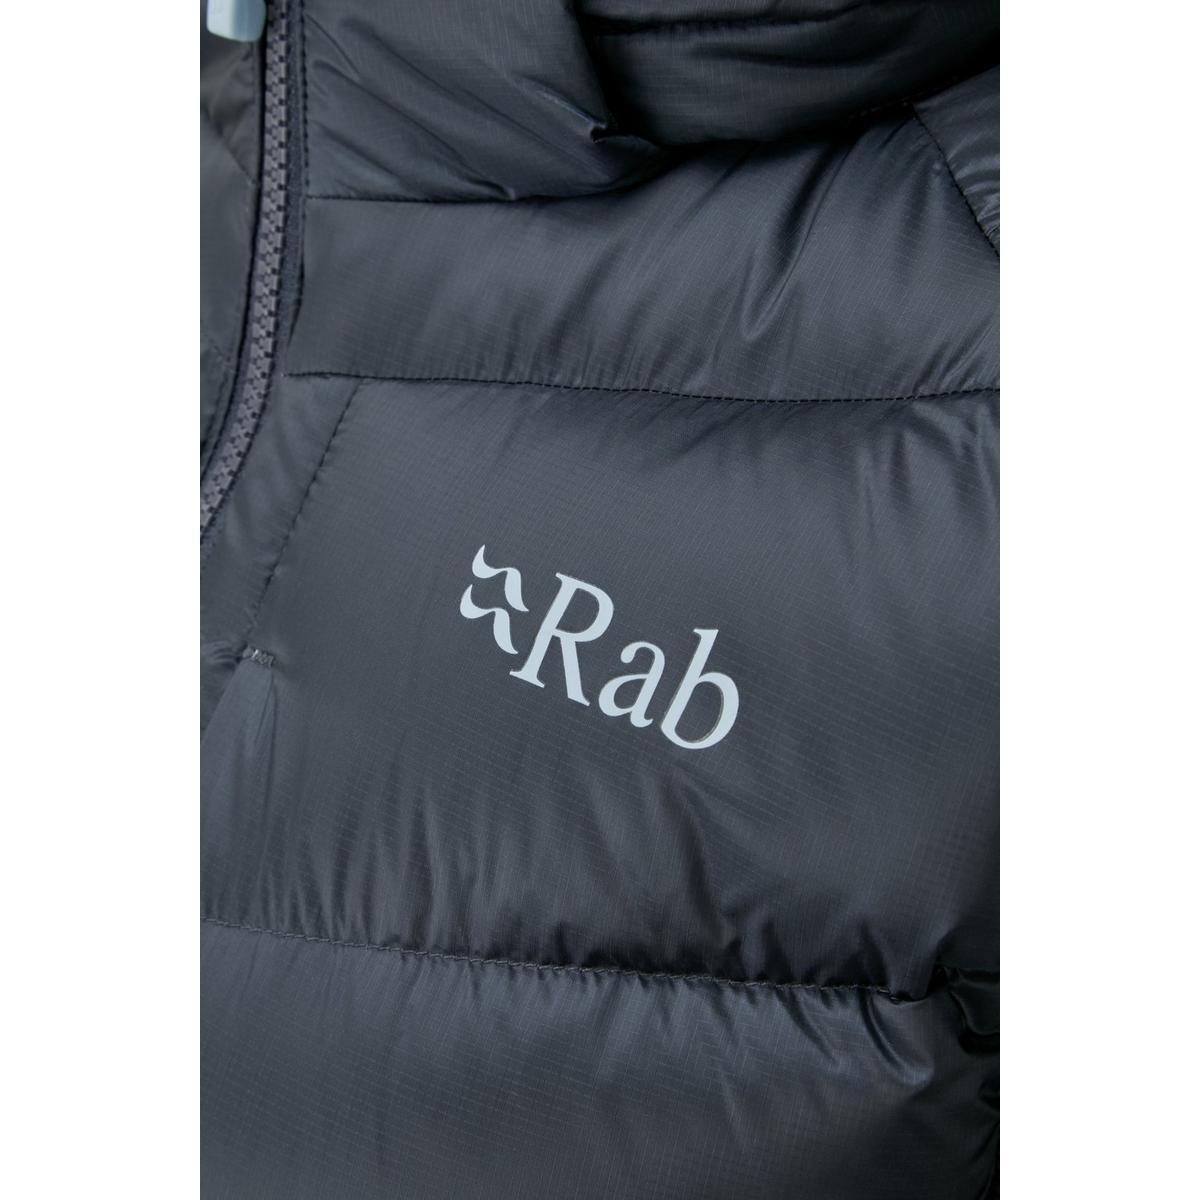 Rab Women's Axion Pro Jacket - Grey